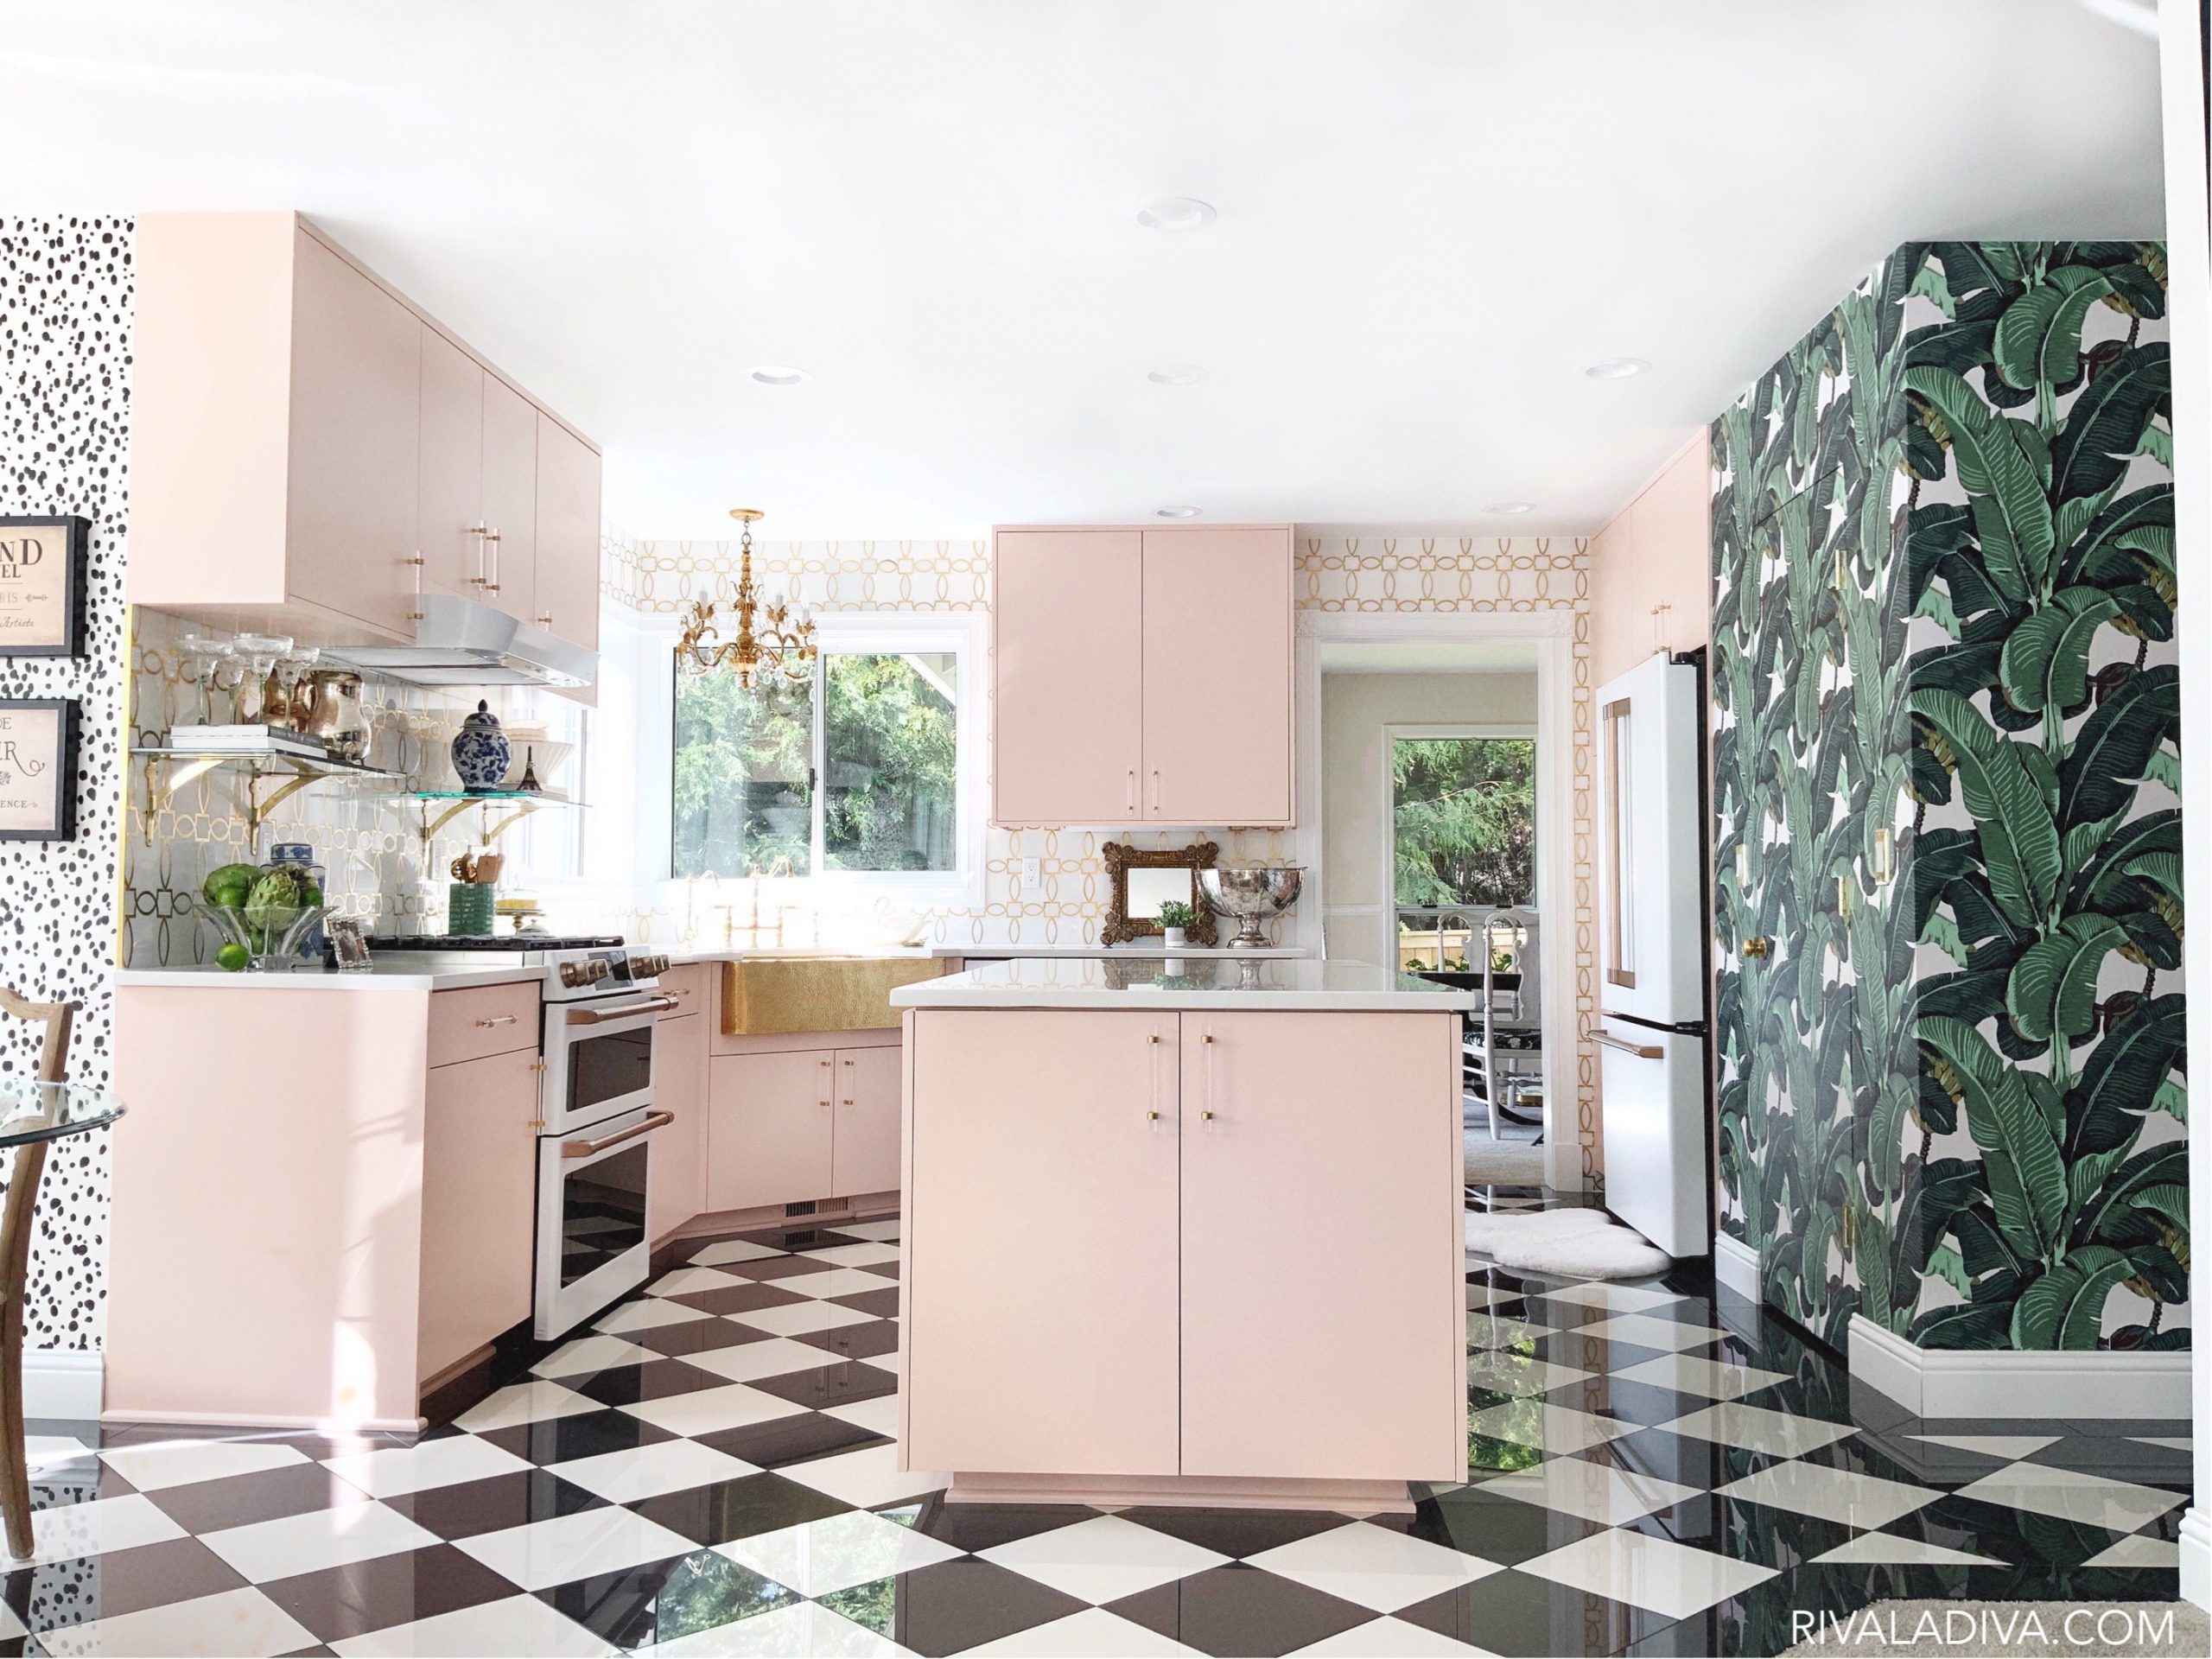 https://www.rivaladiva.com/wp-content/uploads/2020/04/blush-kitchen-reveal-1-at-rivaladiva-dotcom-scaled.jpg